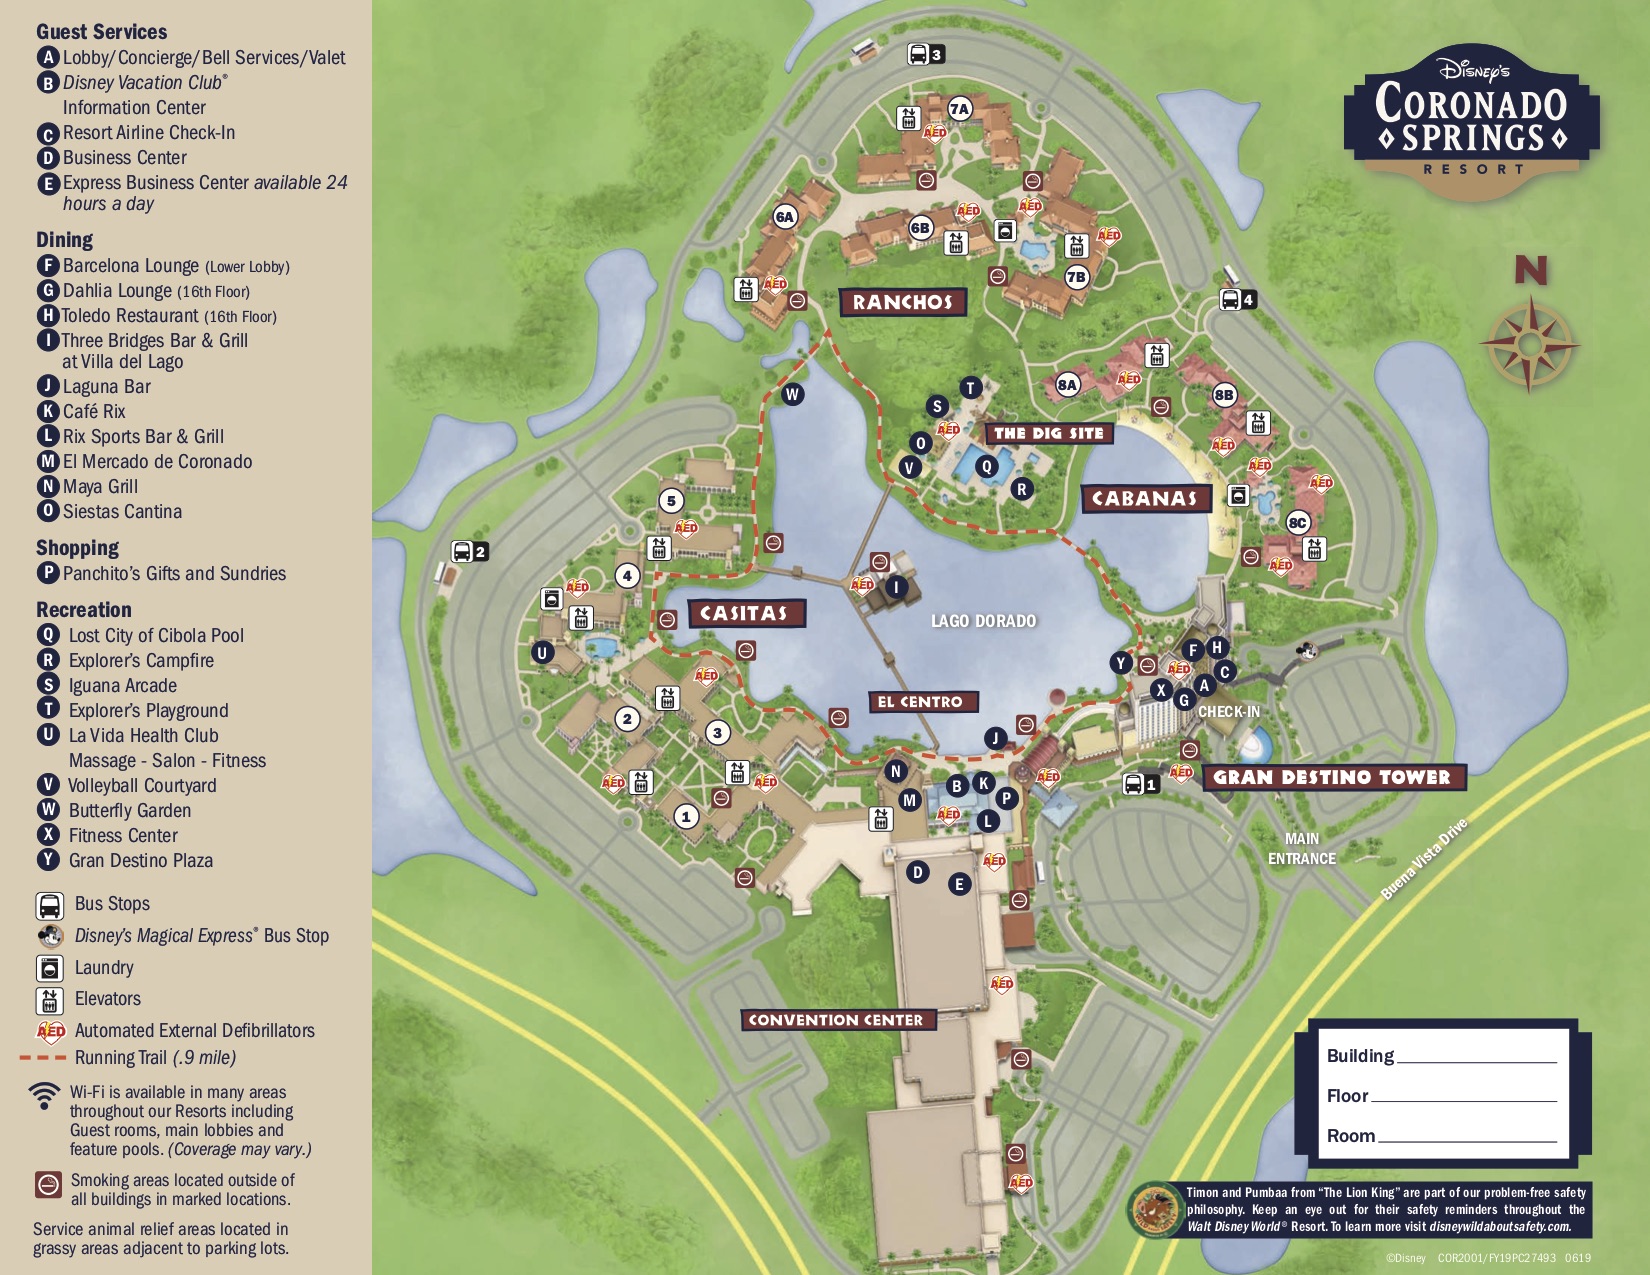 a map of the Coronado Springs resort